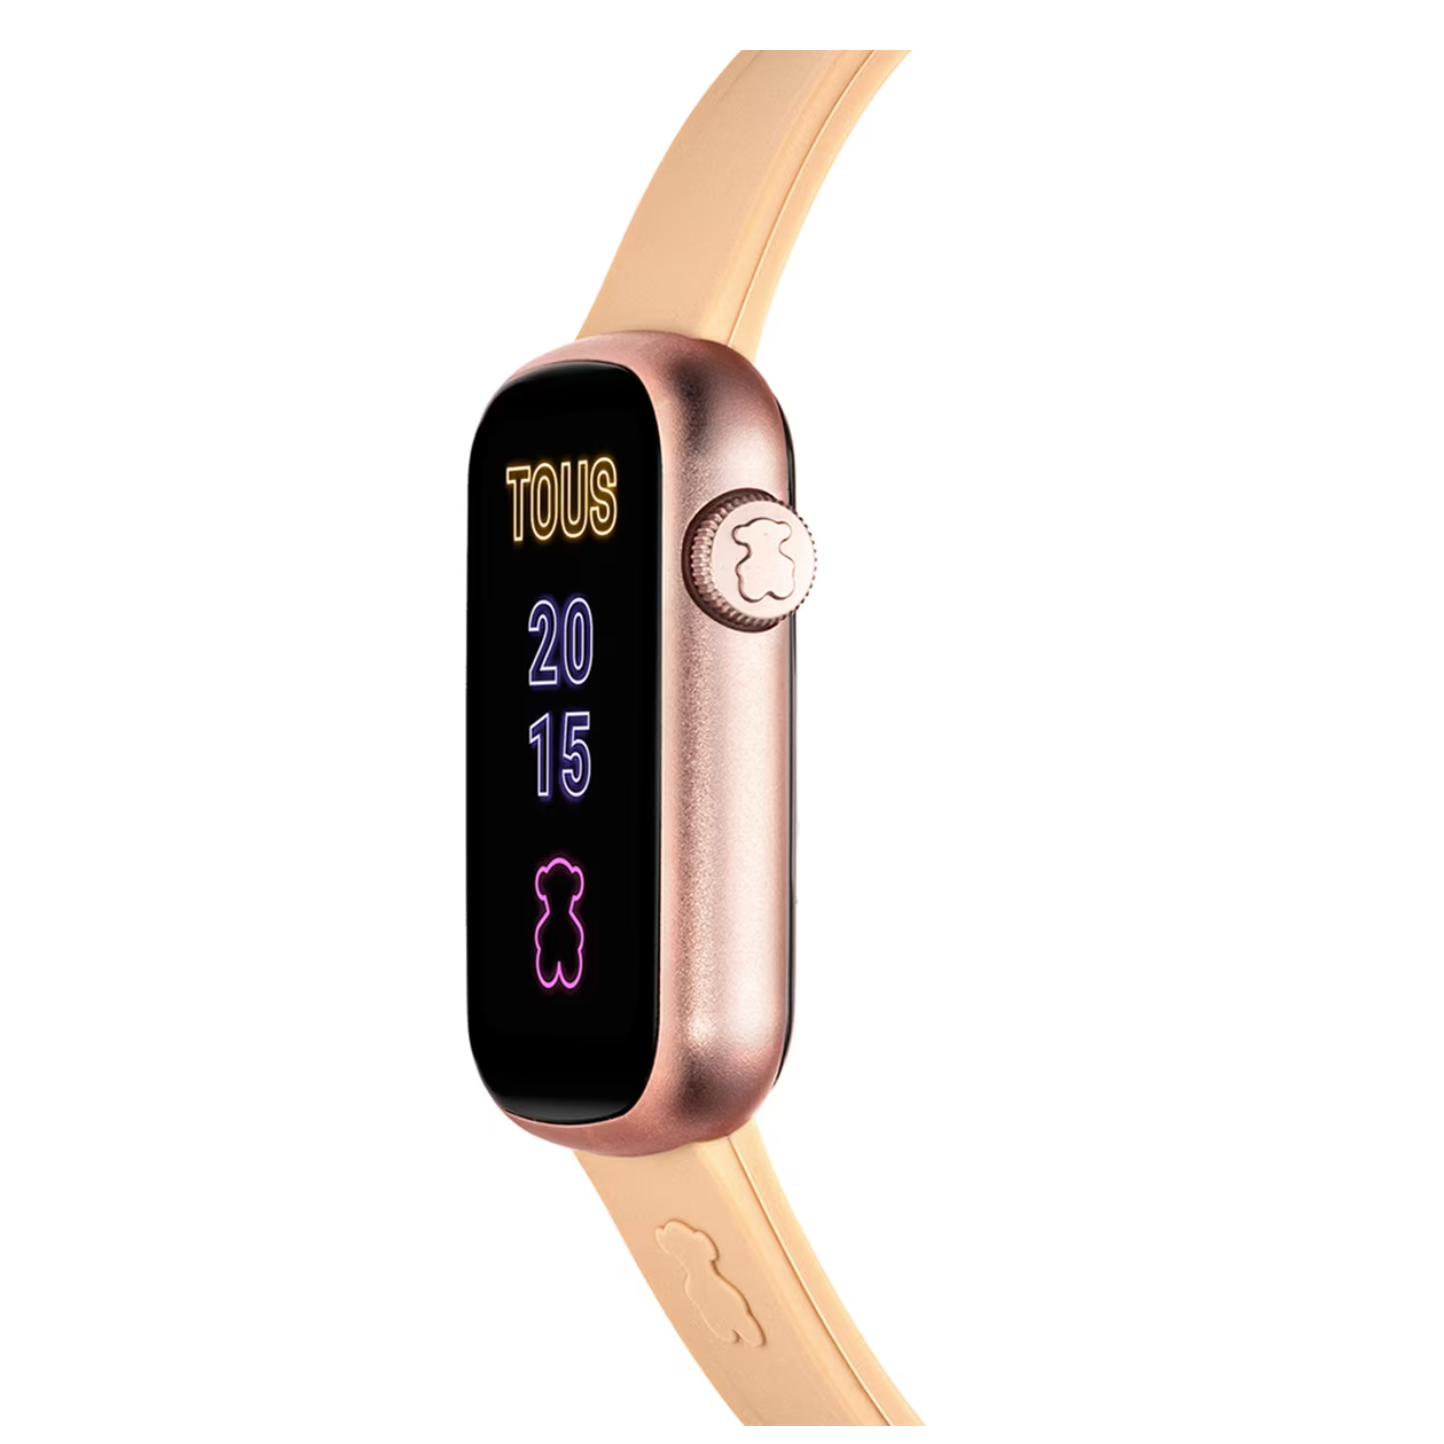 Reloj TOUS smartwatch T-Band rosa / negro